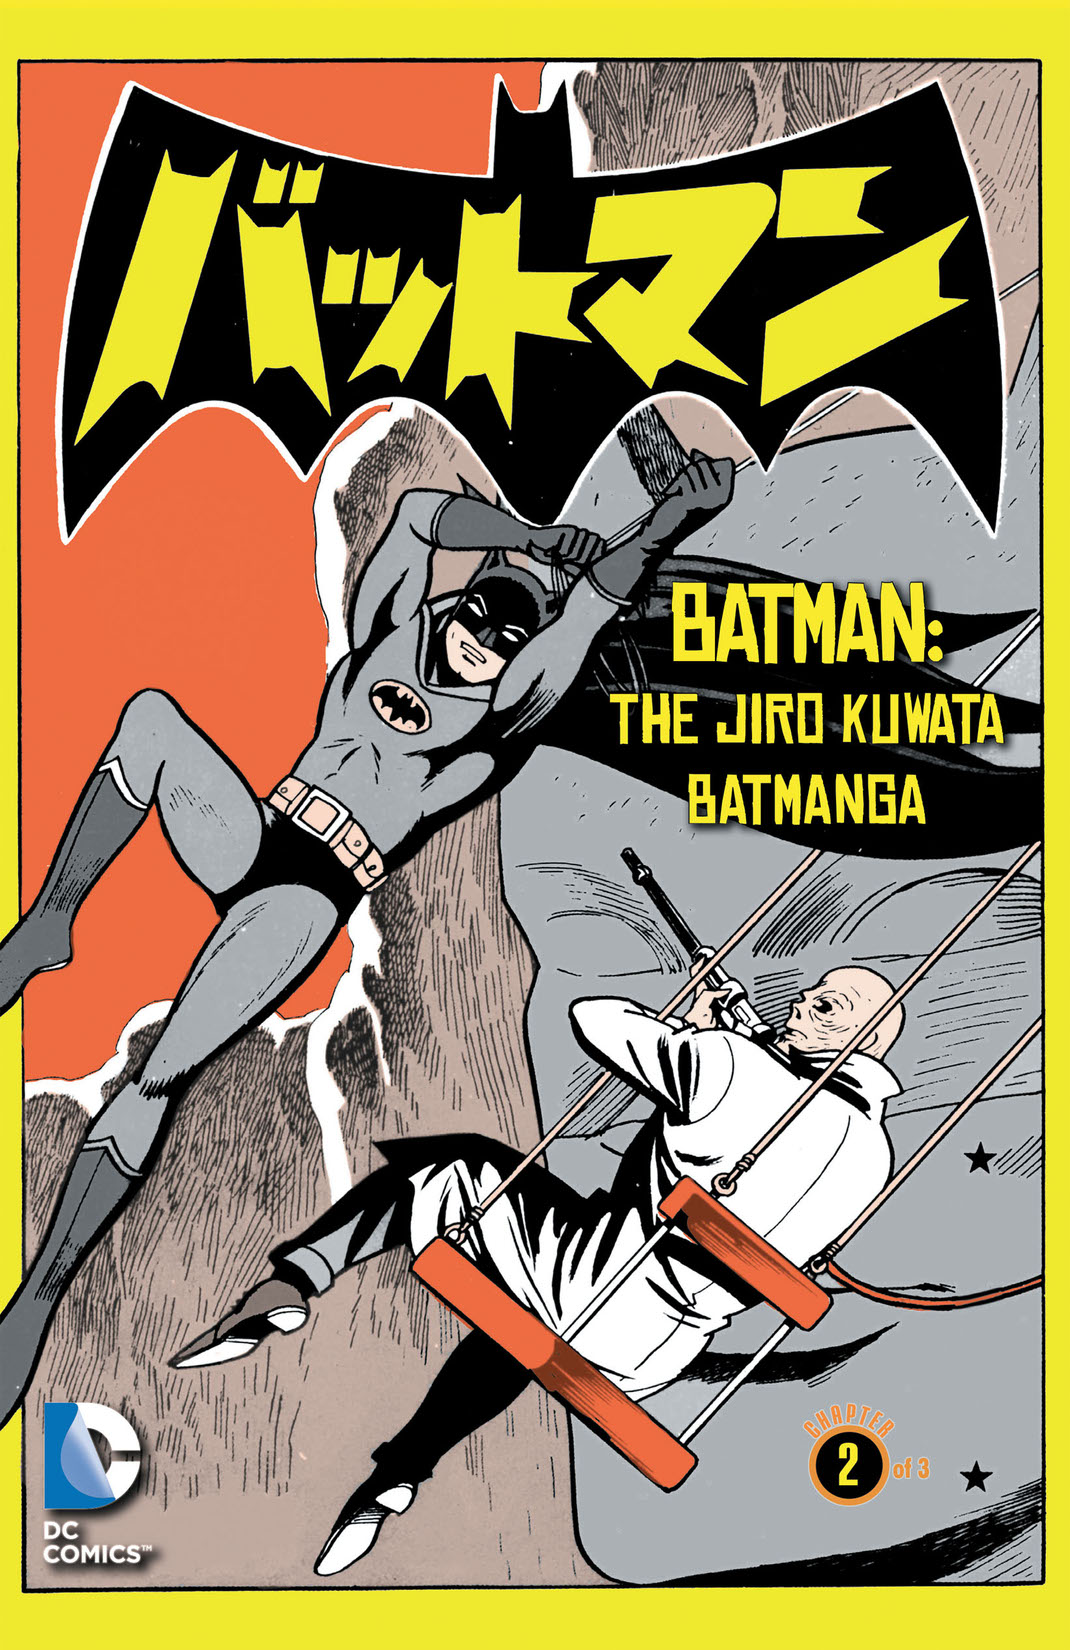 Batman: The Jiro Kuwata Batmanga #5 preview images